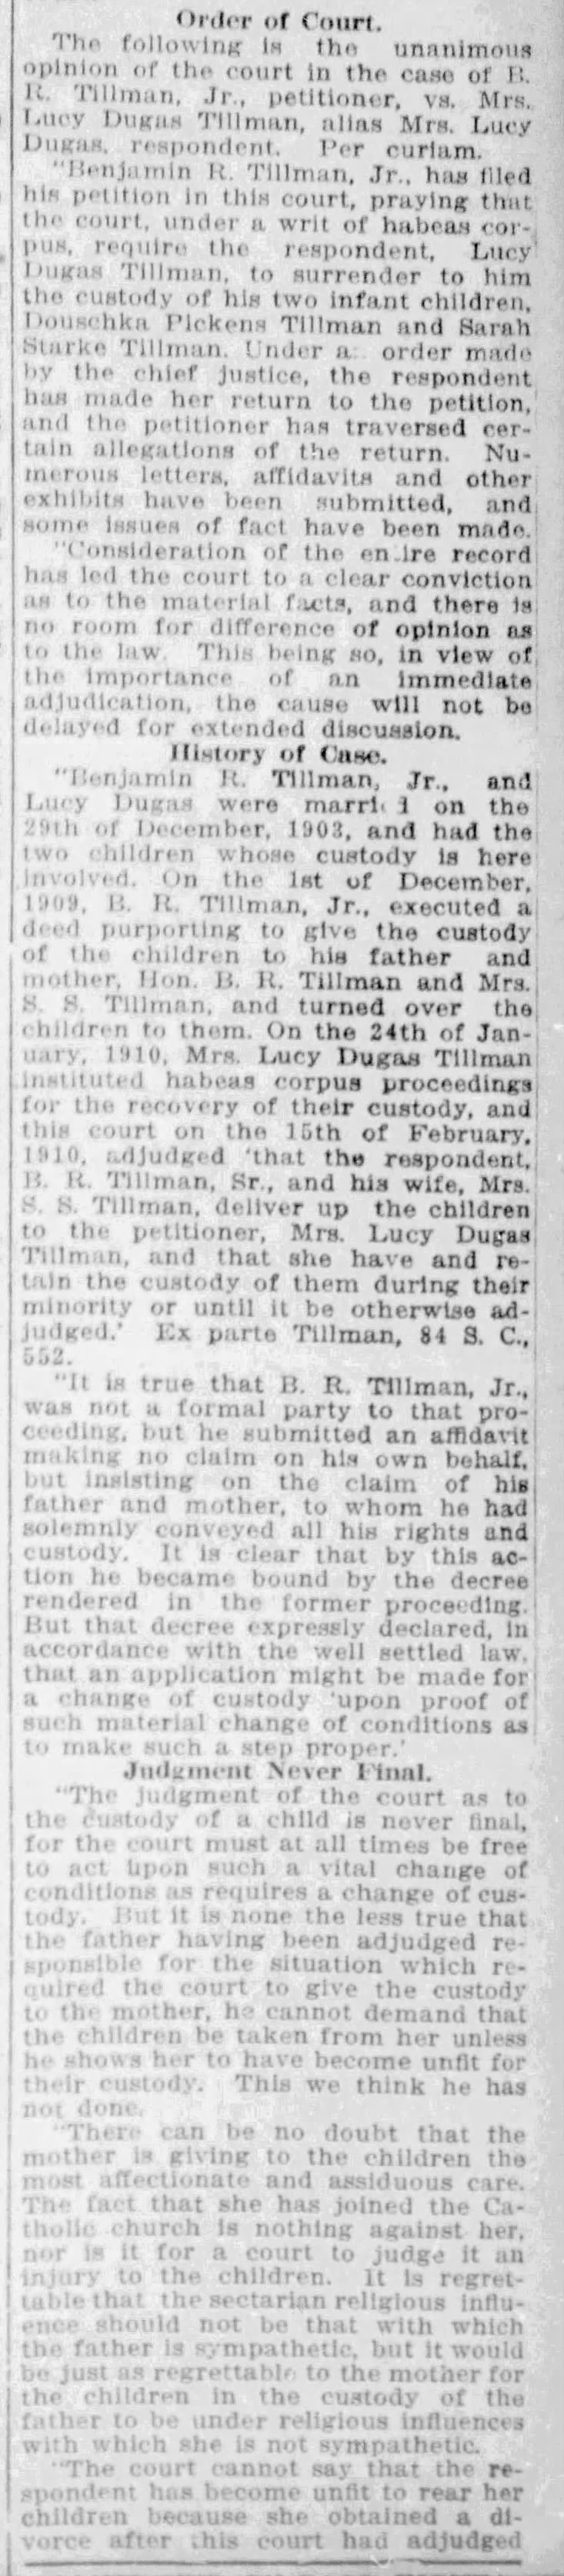 Order of the Court in the Tillman custody case - 1912